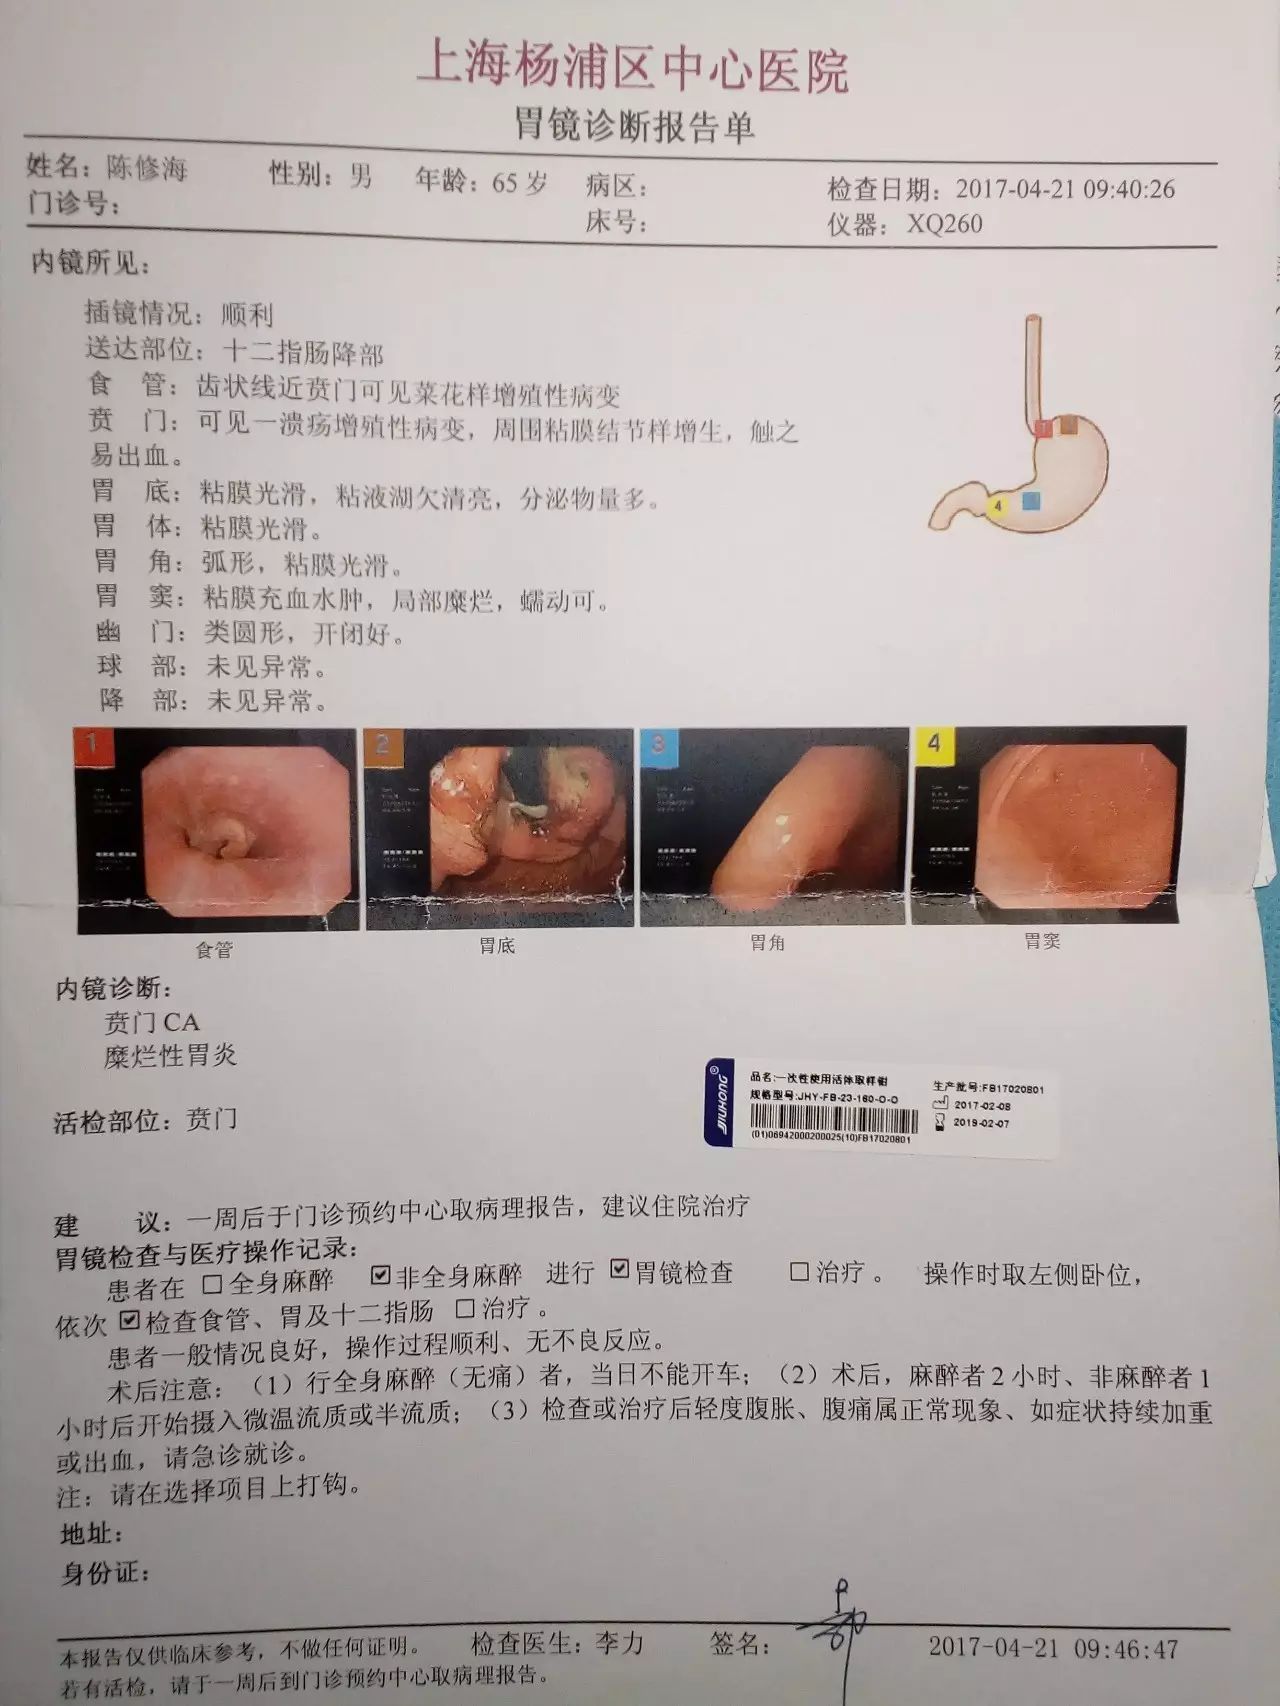 a,上海杨浦区中心医院胃镜报告单